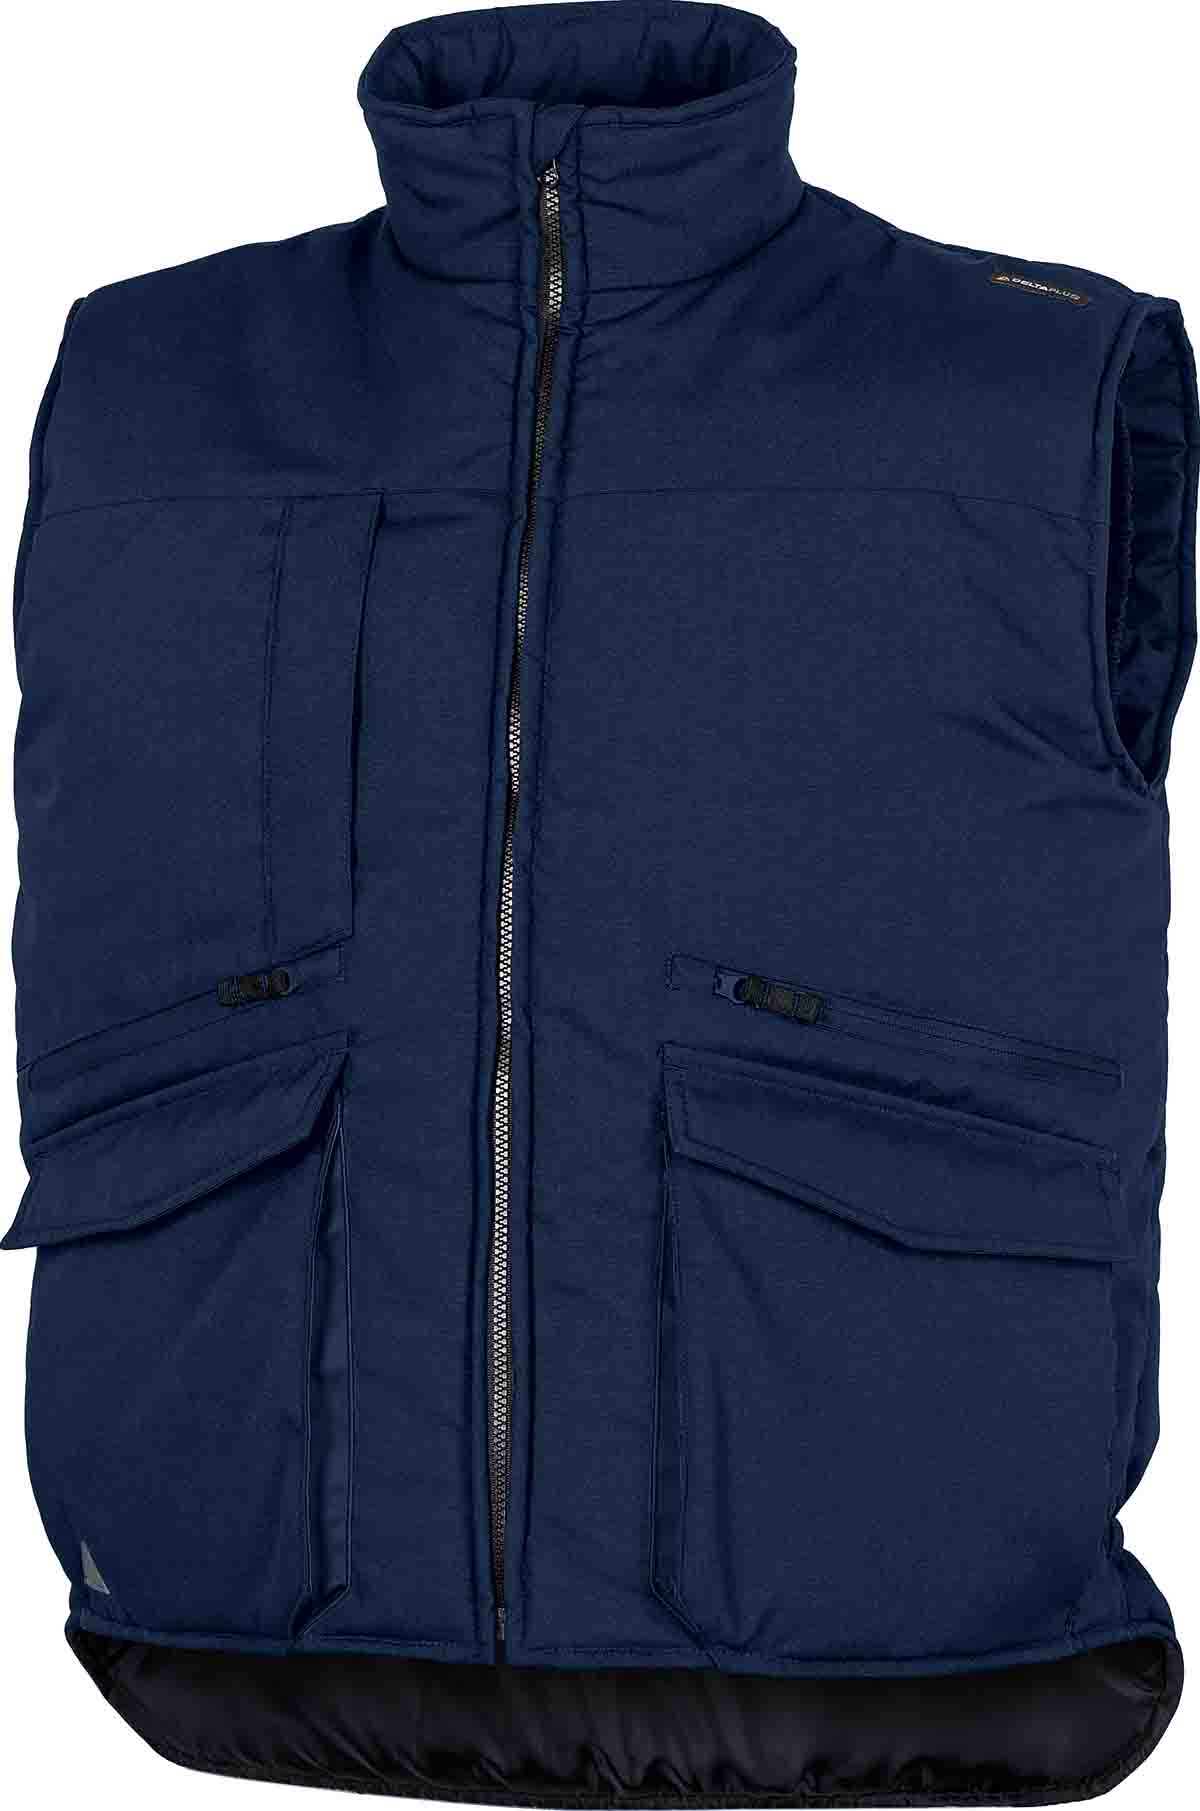 Delta Plus Navy Windproof Waistcoat, XL